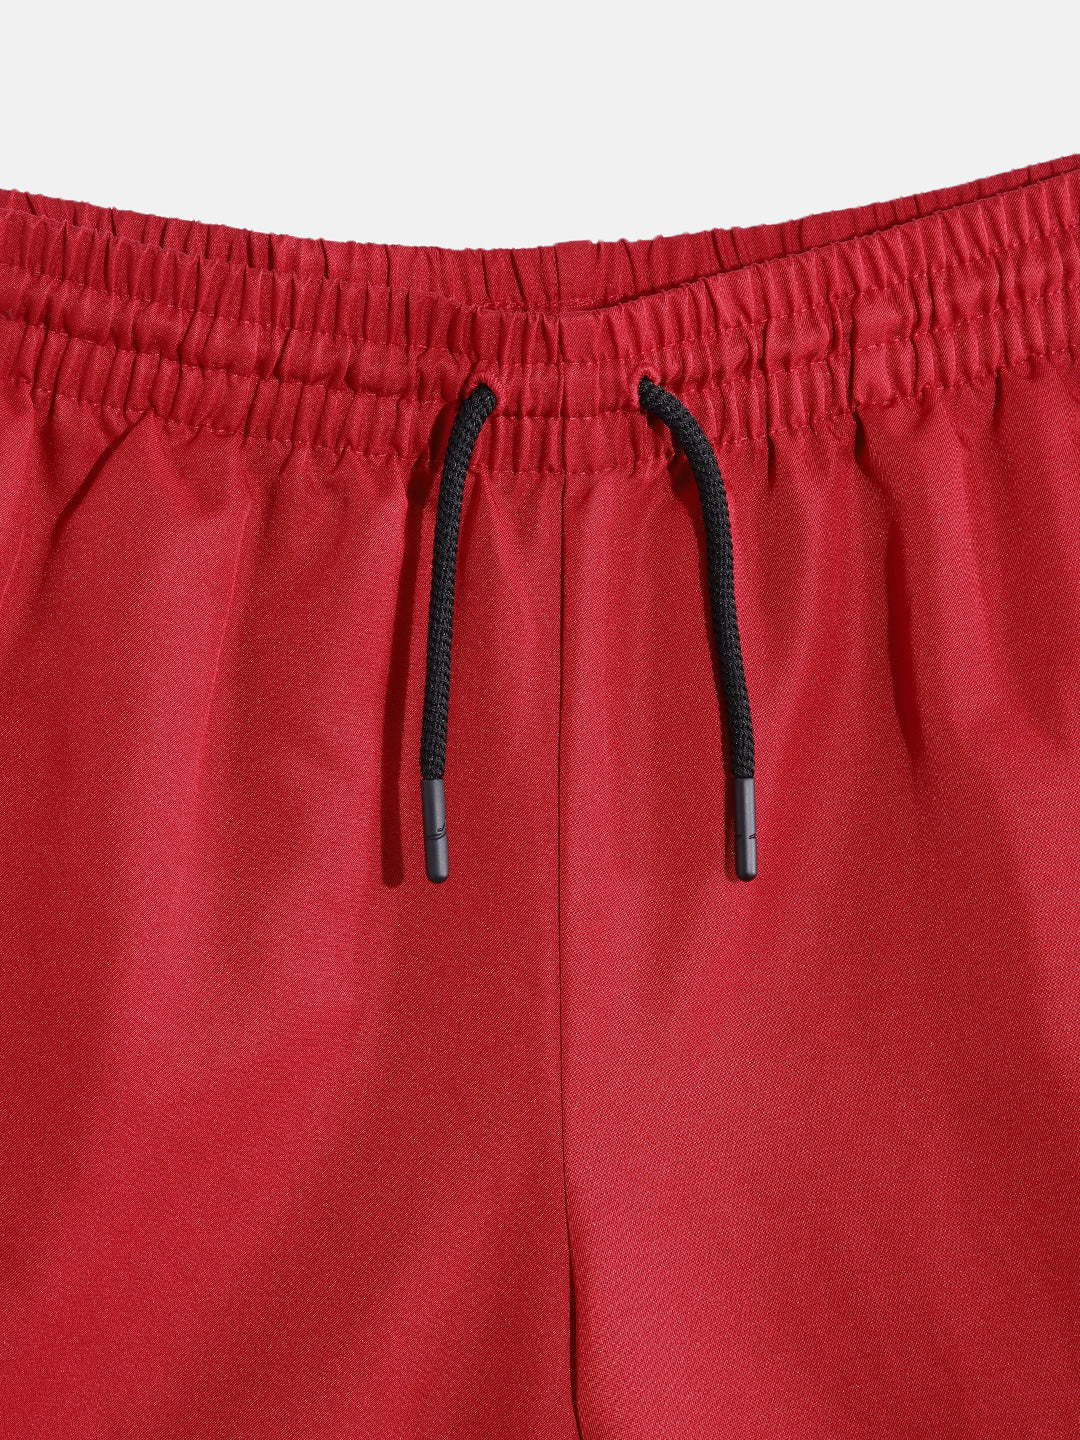 jordan red woven play shorts